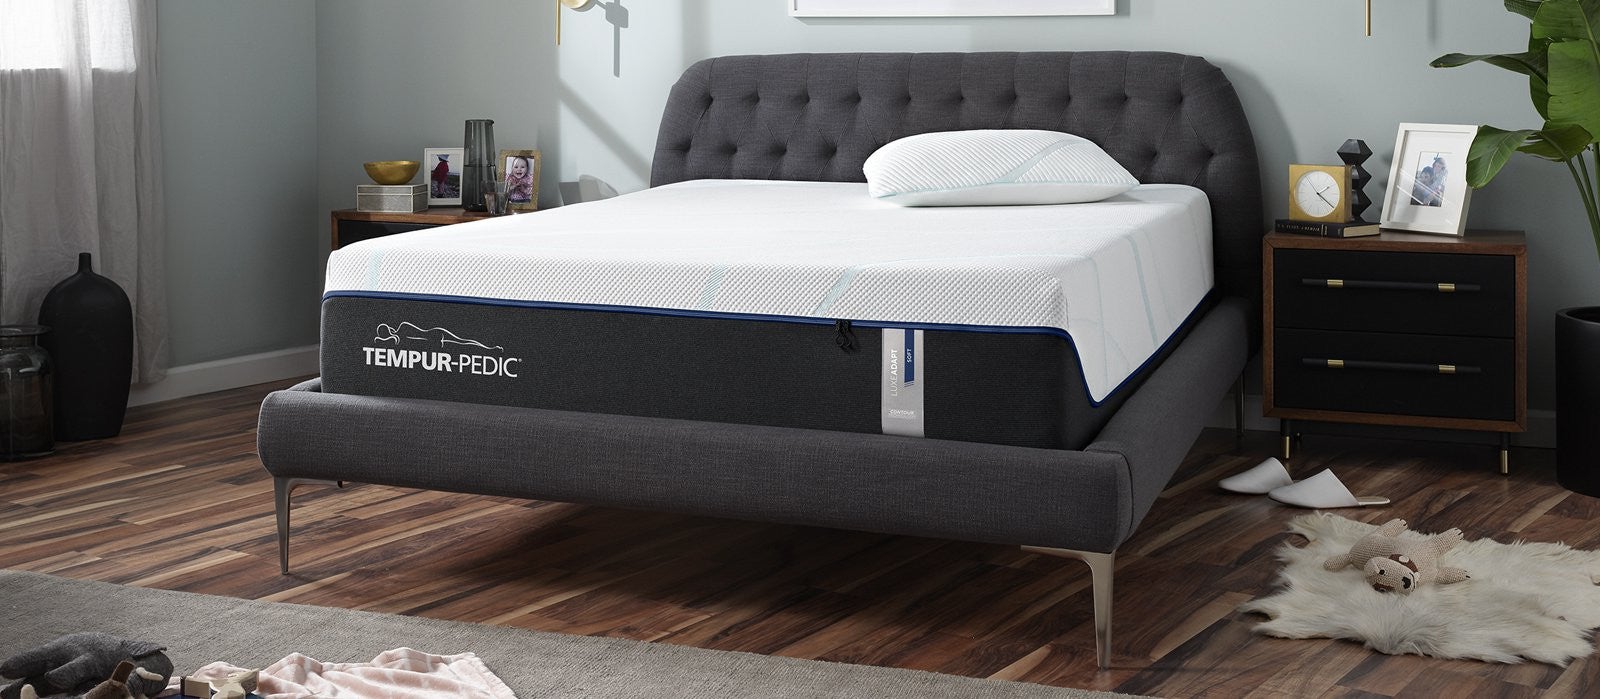 tempur-pedic king mattress sale